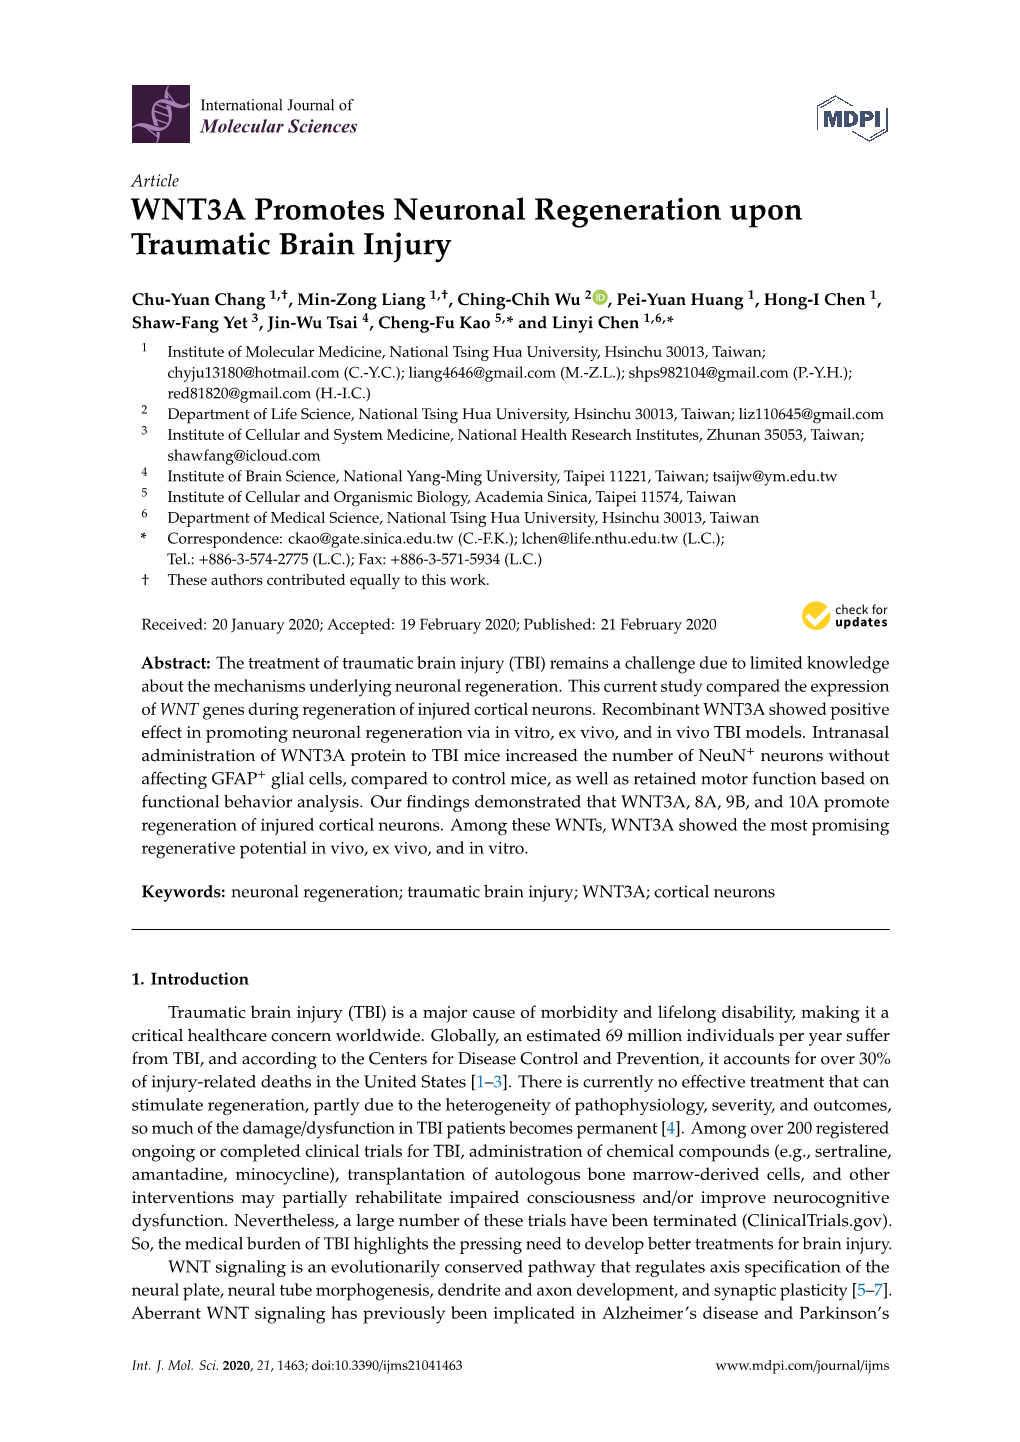 WNT3A Promotes Neuronal Regeneration Upon Traumatic Brain Injury